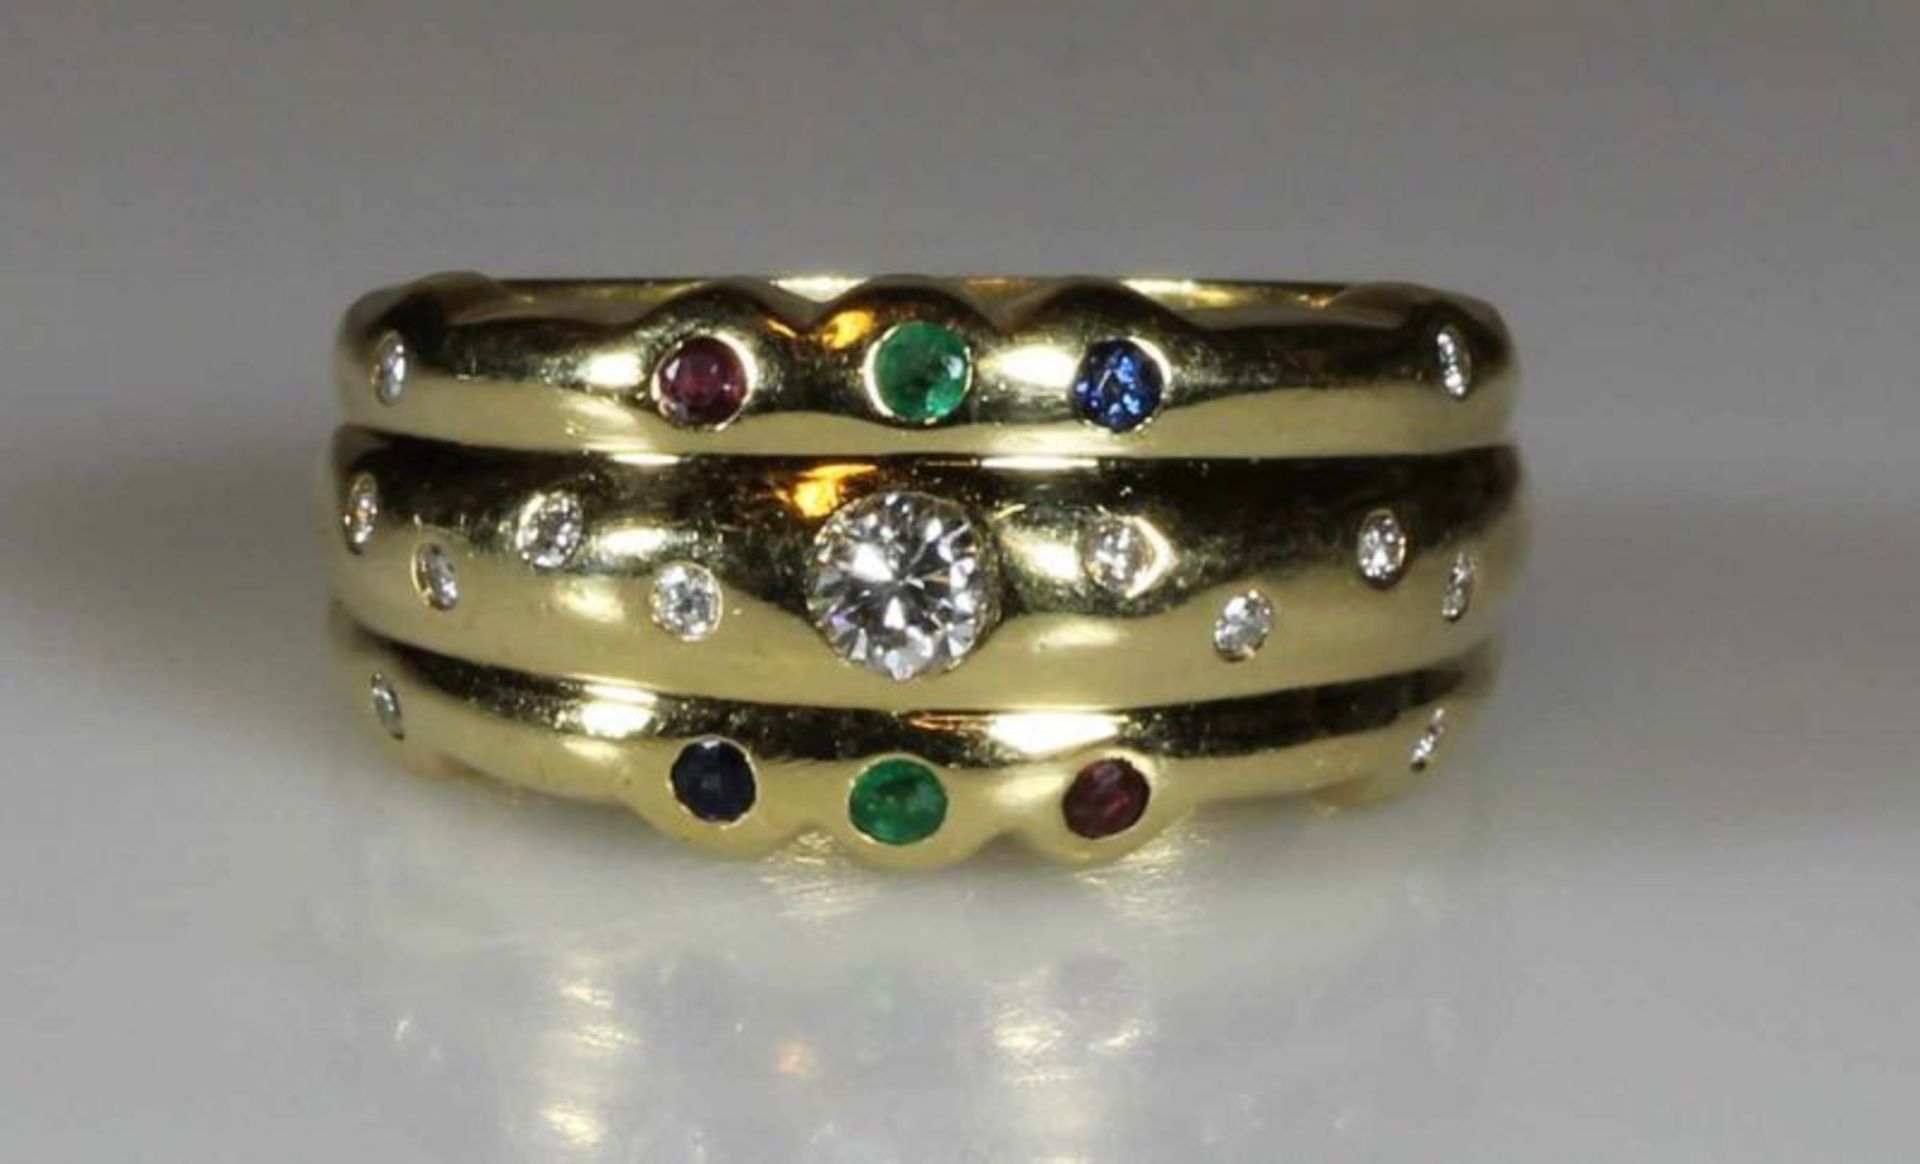 Ring, GG 750, 1 Brillant ca. 0.10 ct., 12 Besatz-Diamanten, je 2 Saphire, Rubine, Smaragde, 12 g, RM